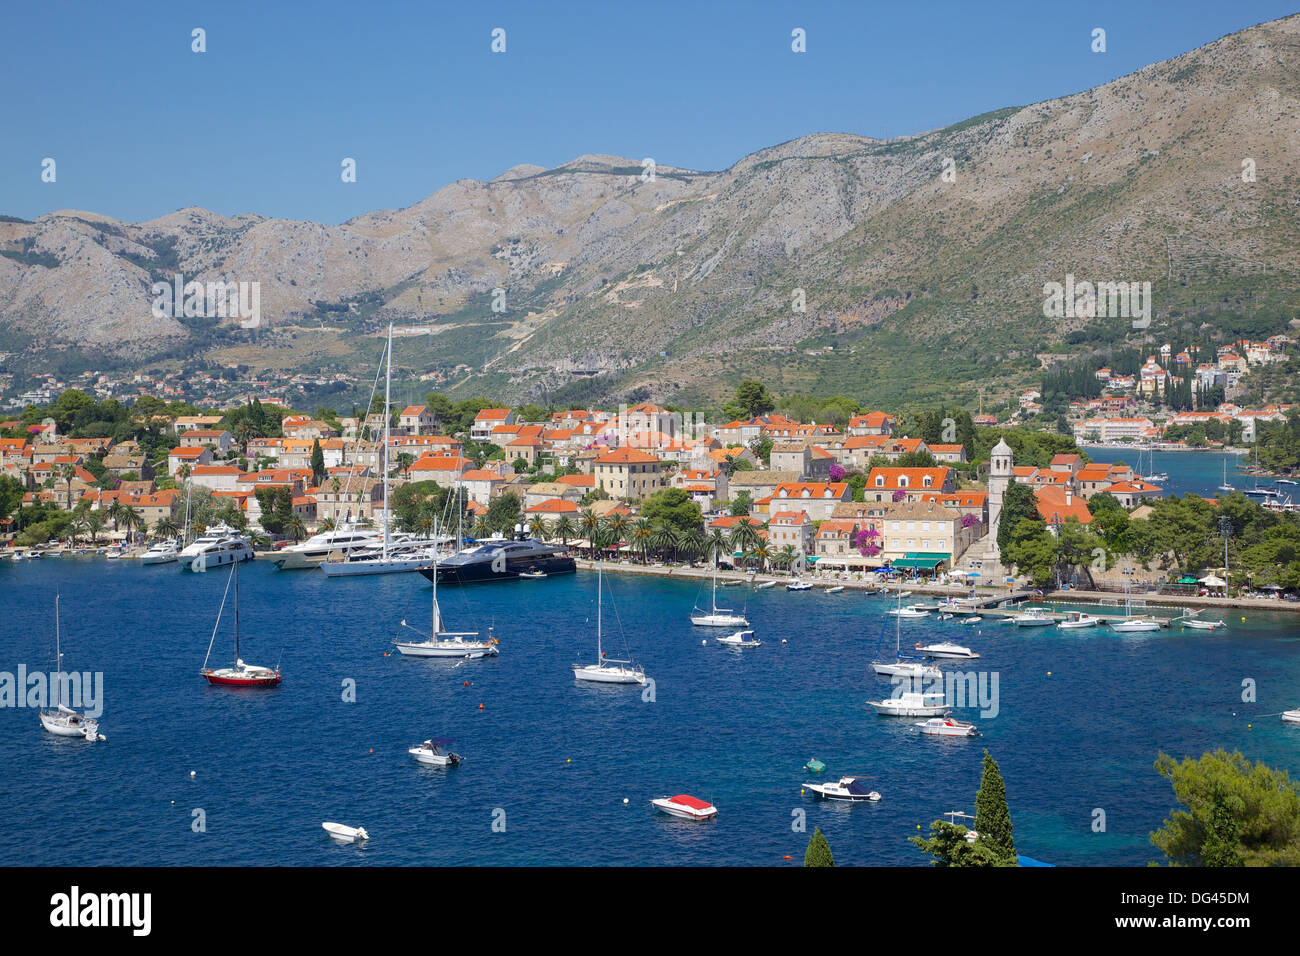 View of Old Town and Adriatic Coast, Cavtat, Dubrovnik Riviera, Dalmatian Coast, Dalmatia, Croatia, Europe Stock Photo